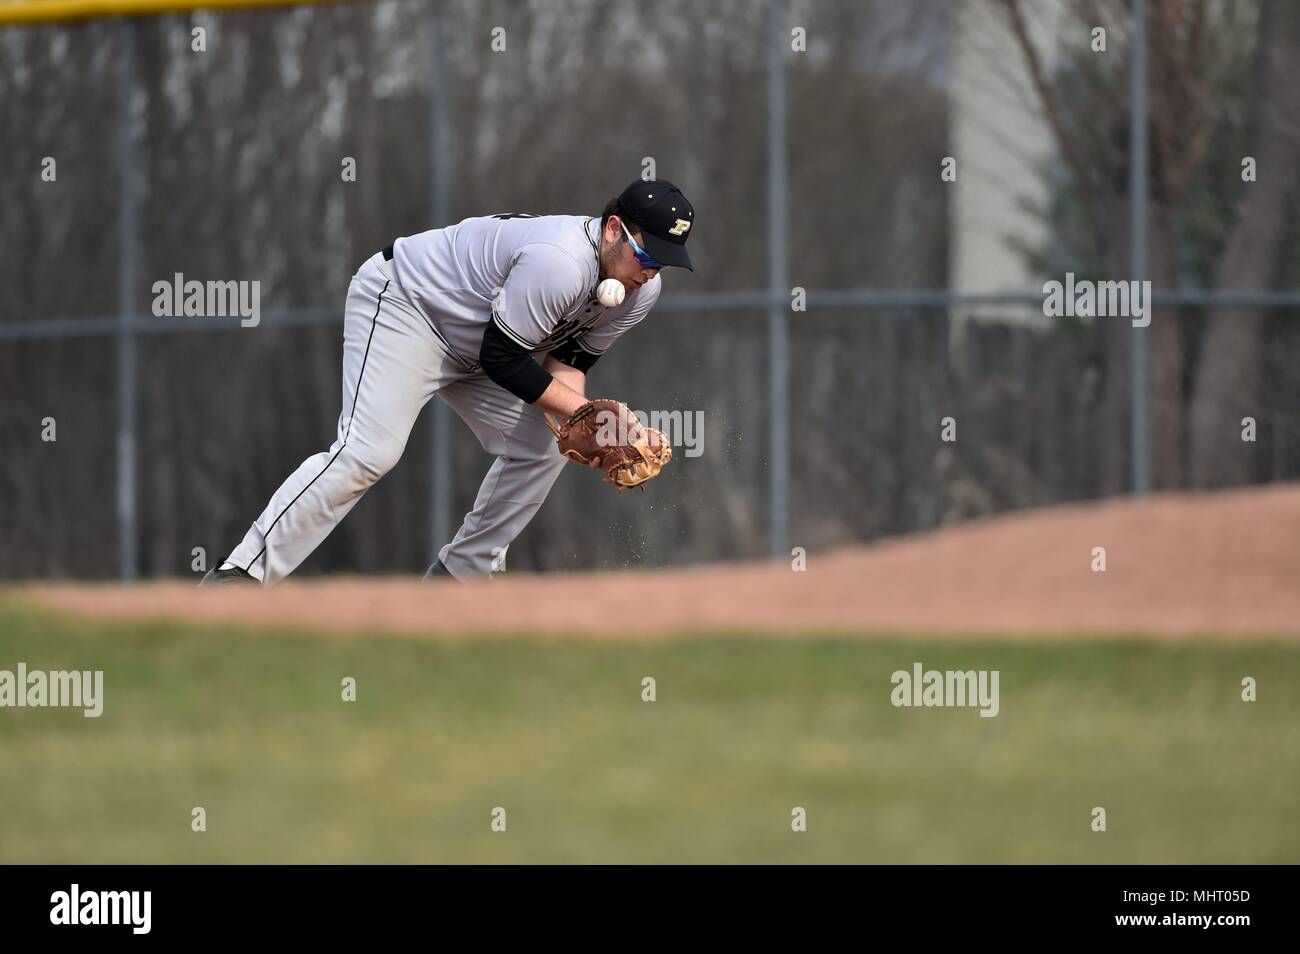 First baseman bobbling a ground ball for an error. USA. Stock Photo